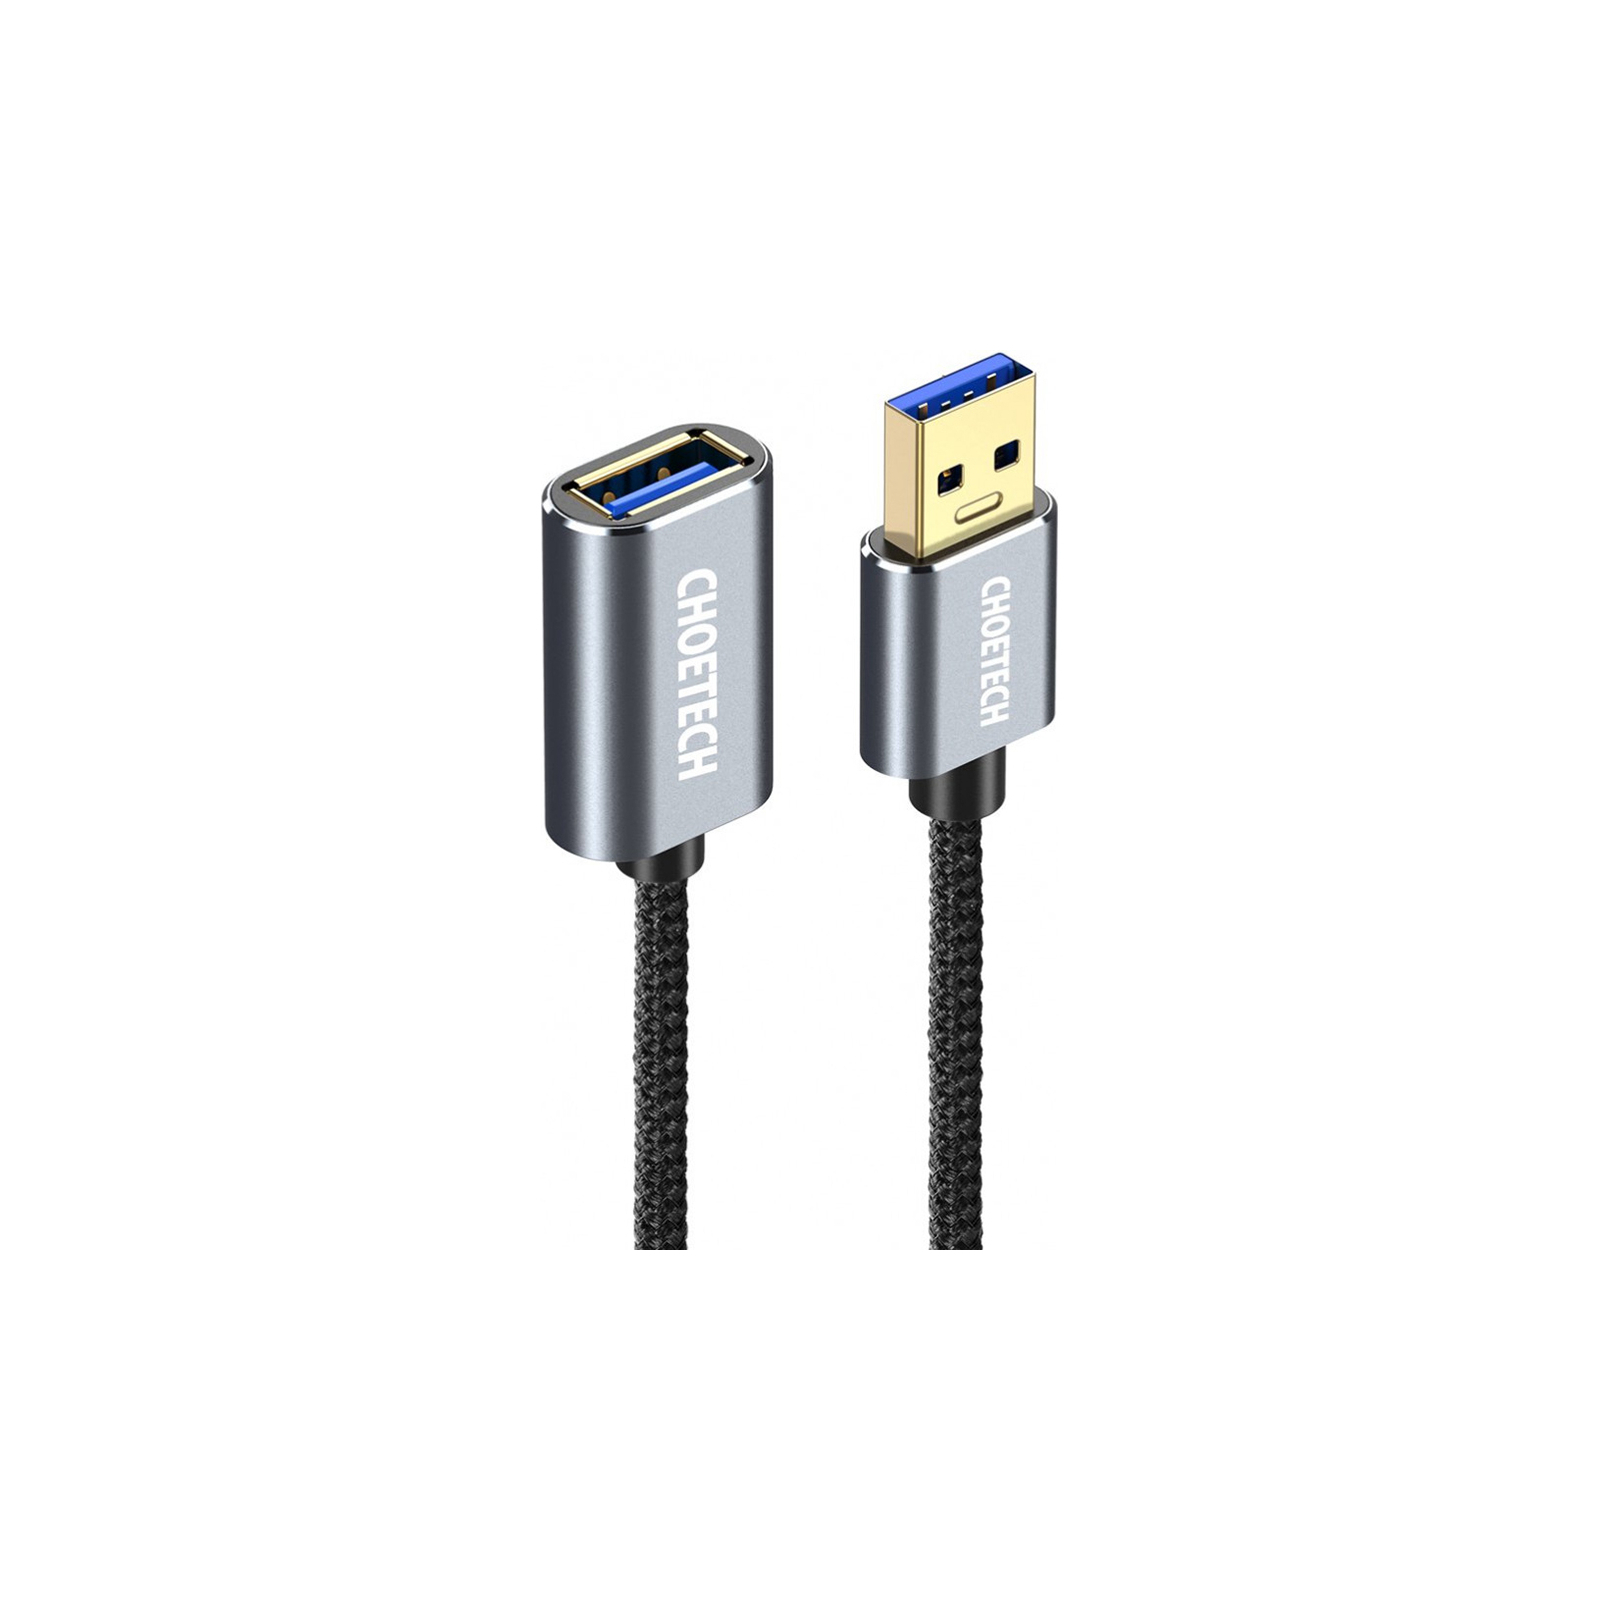 Дата кабель USB 3.0 AM/AF 2.0m Choetech (XAA001)